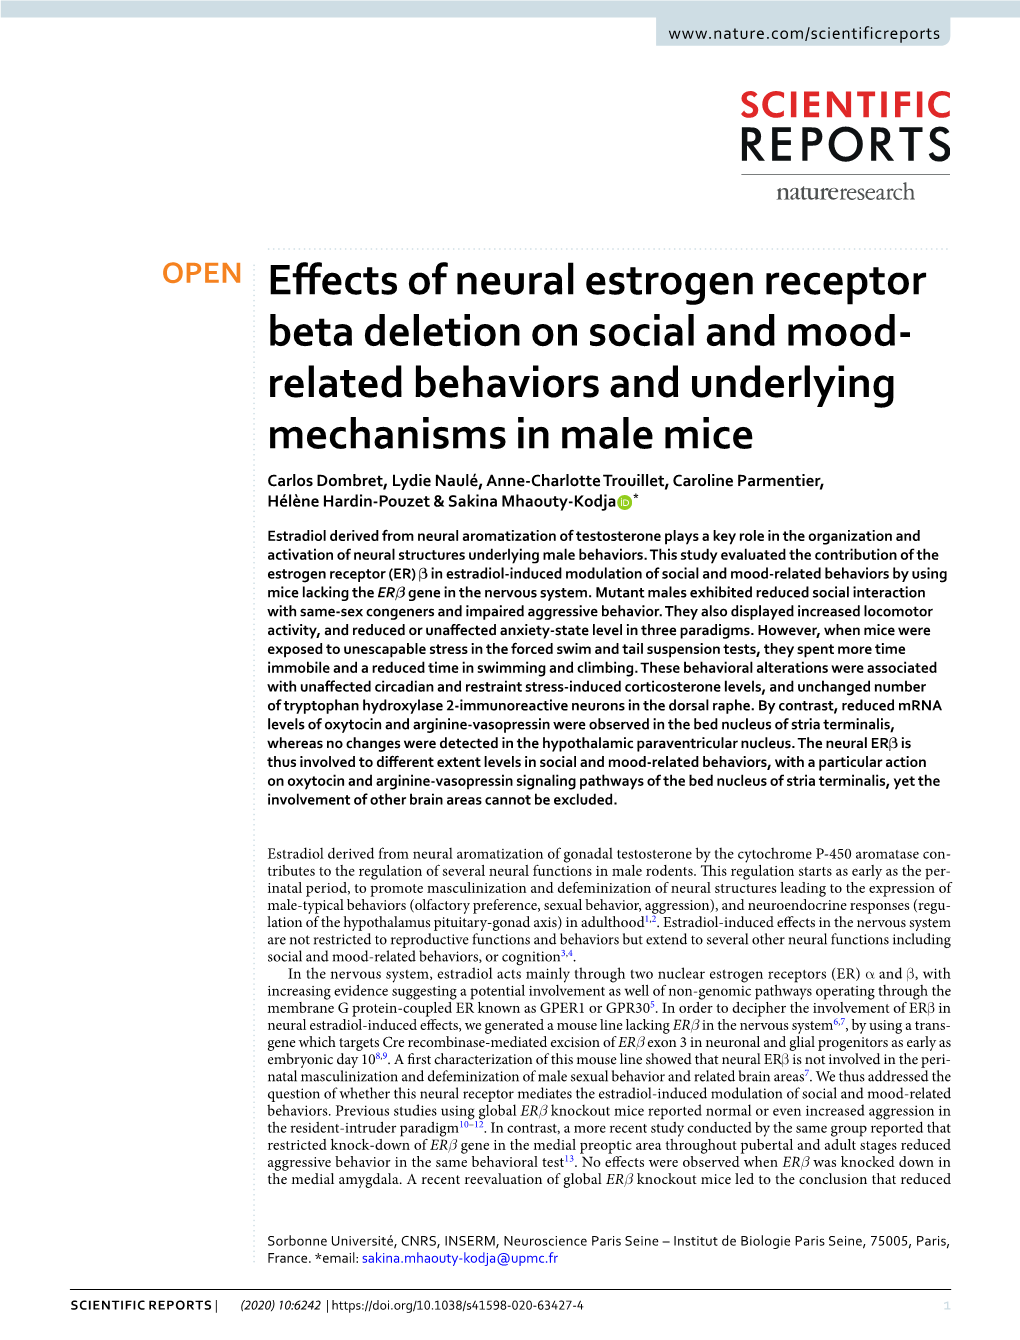 Effects of Neural Estrogen Receptor Beta Deletion on Social and Mood